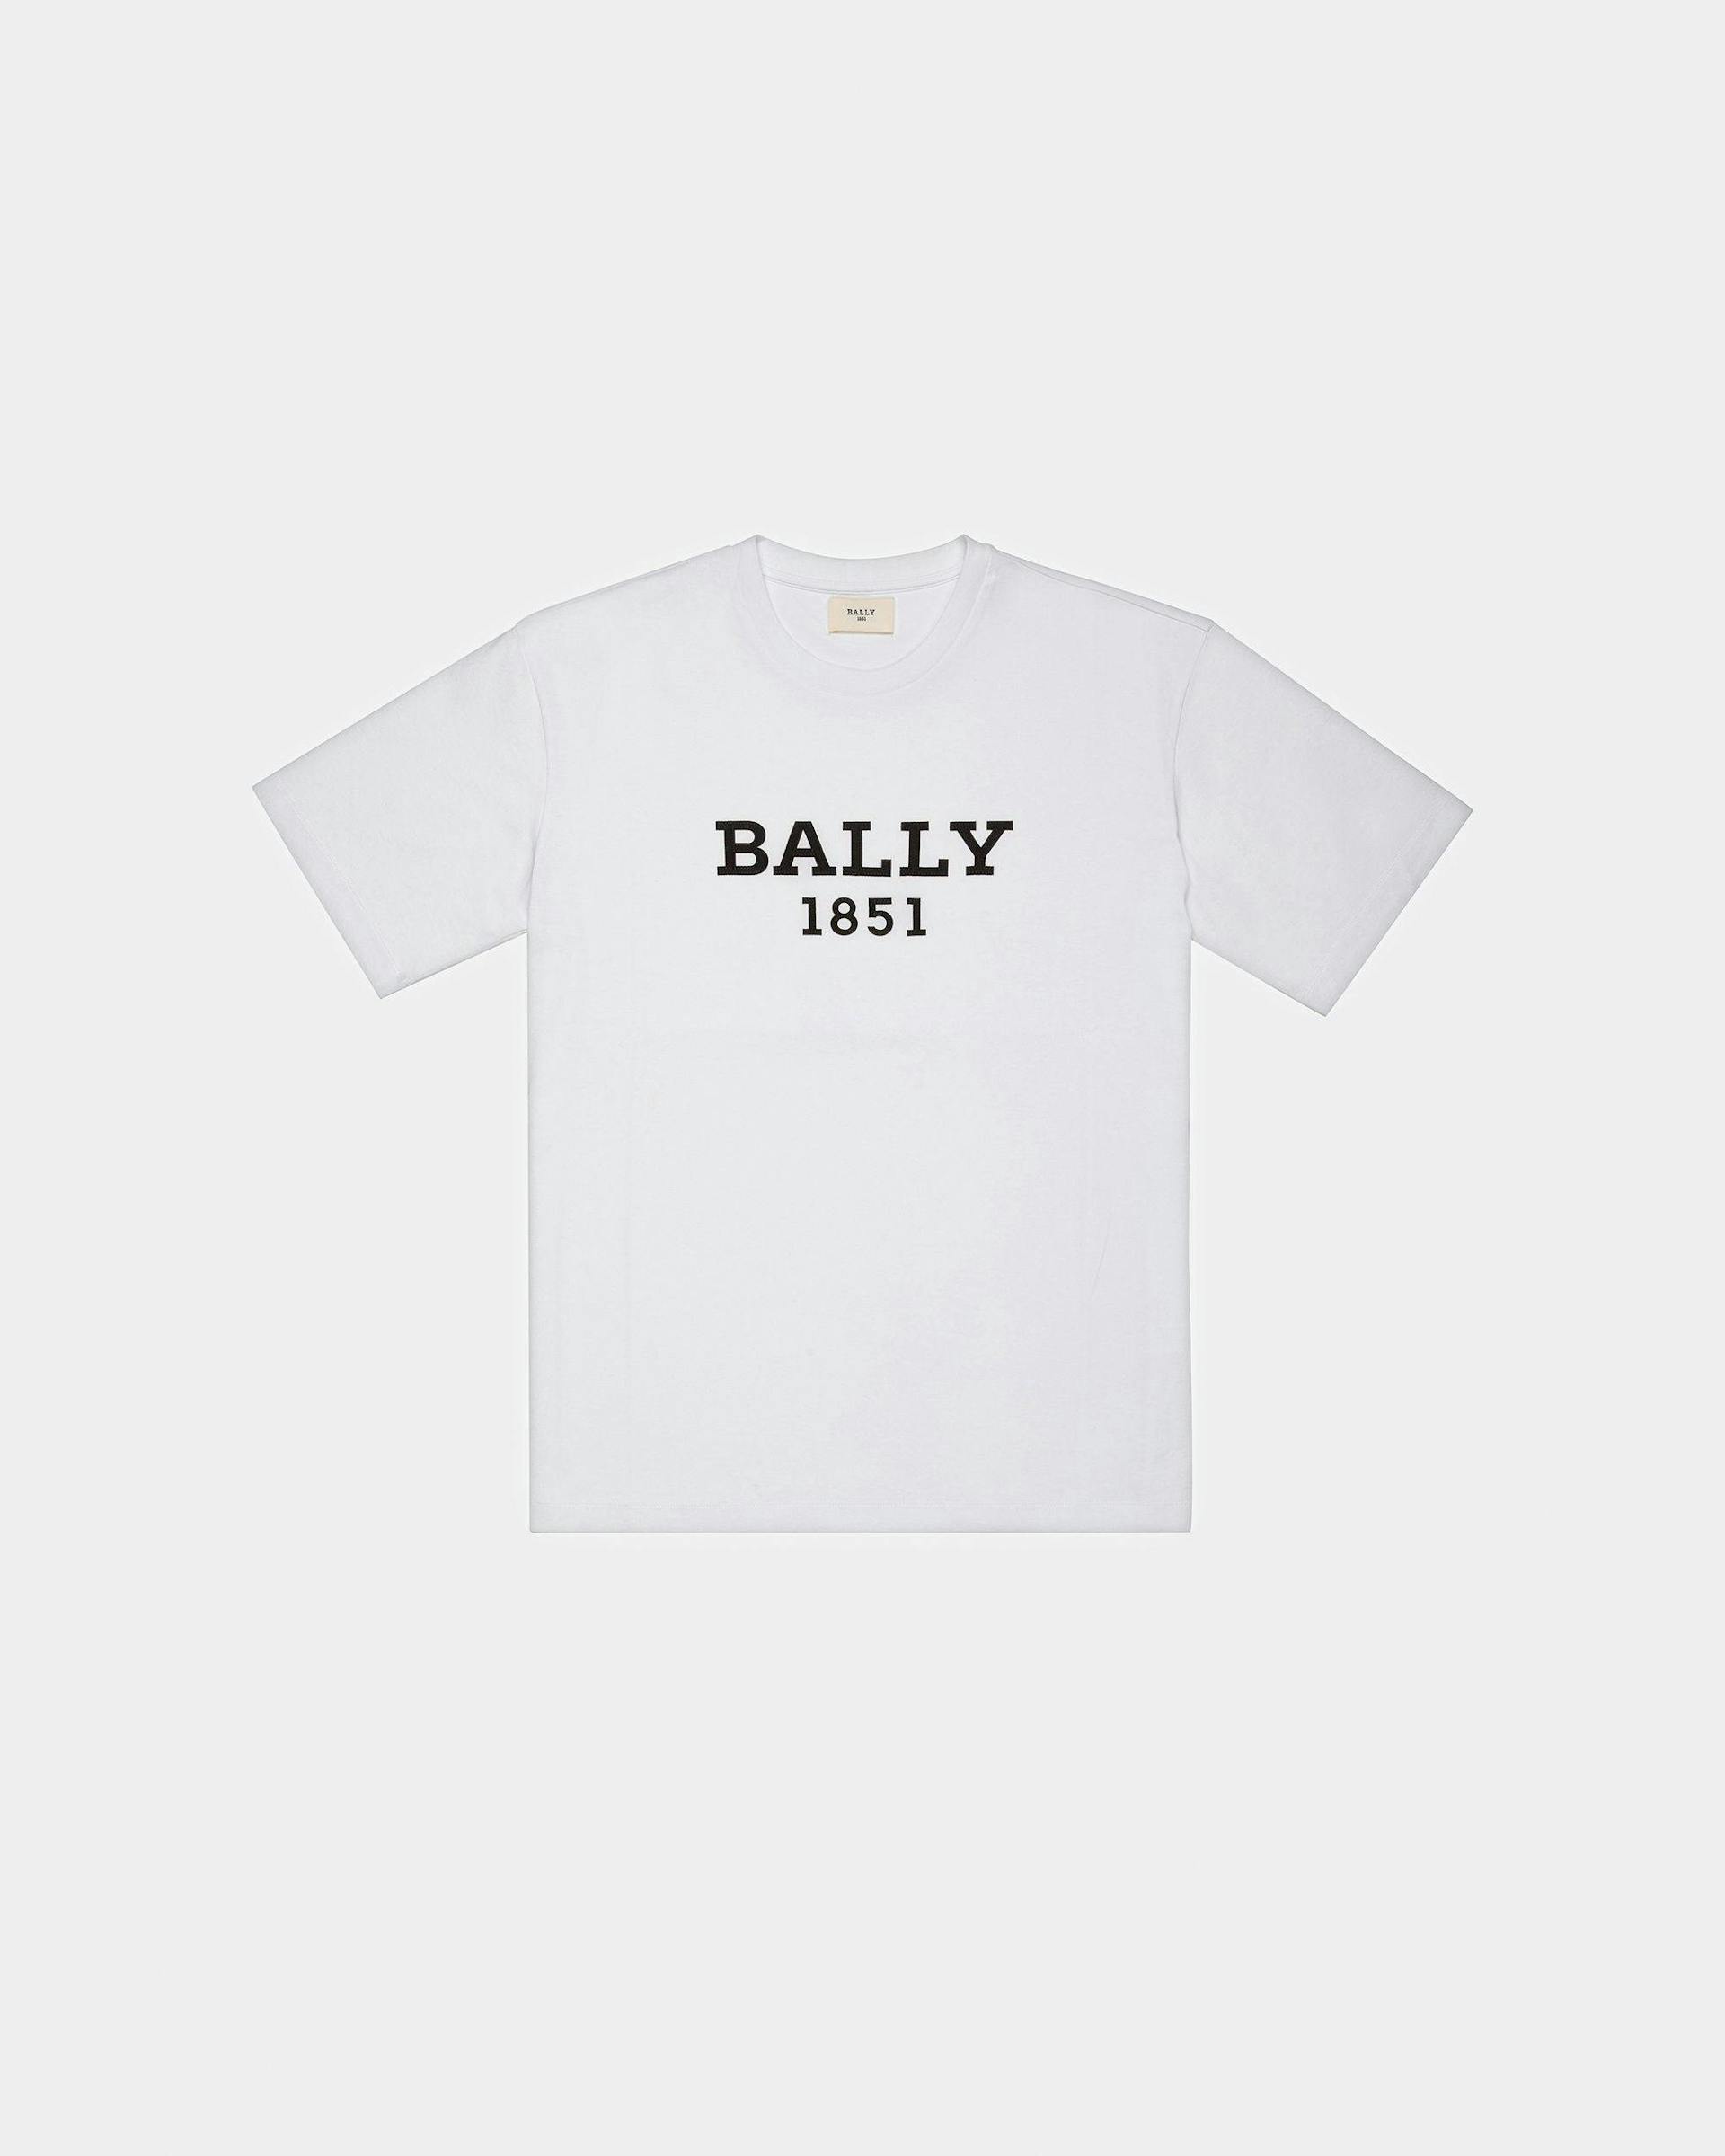 Bally 1851 Organic Cotton T-Shirt - Bally